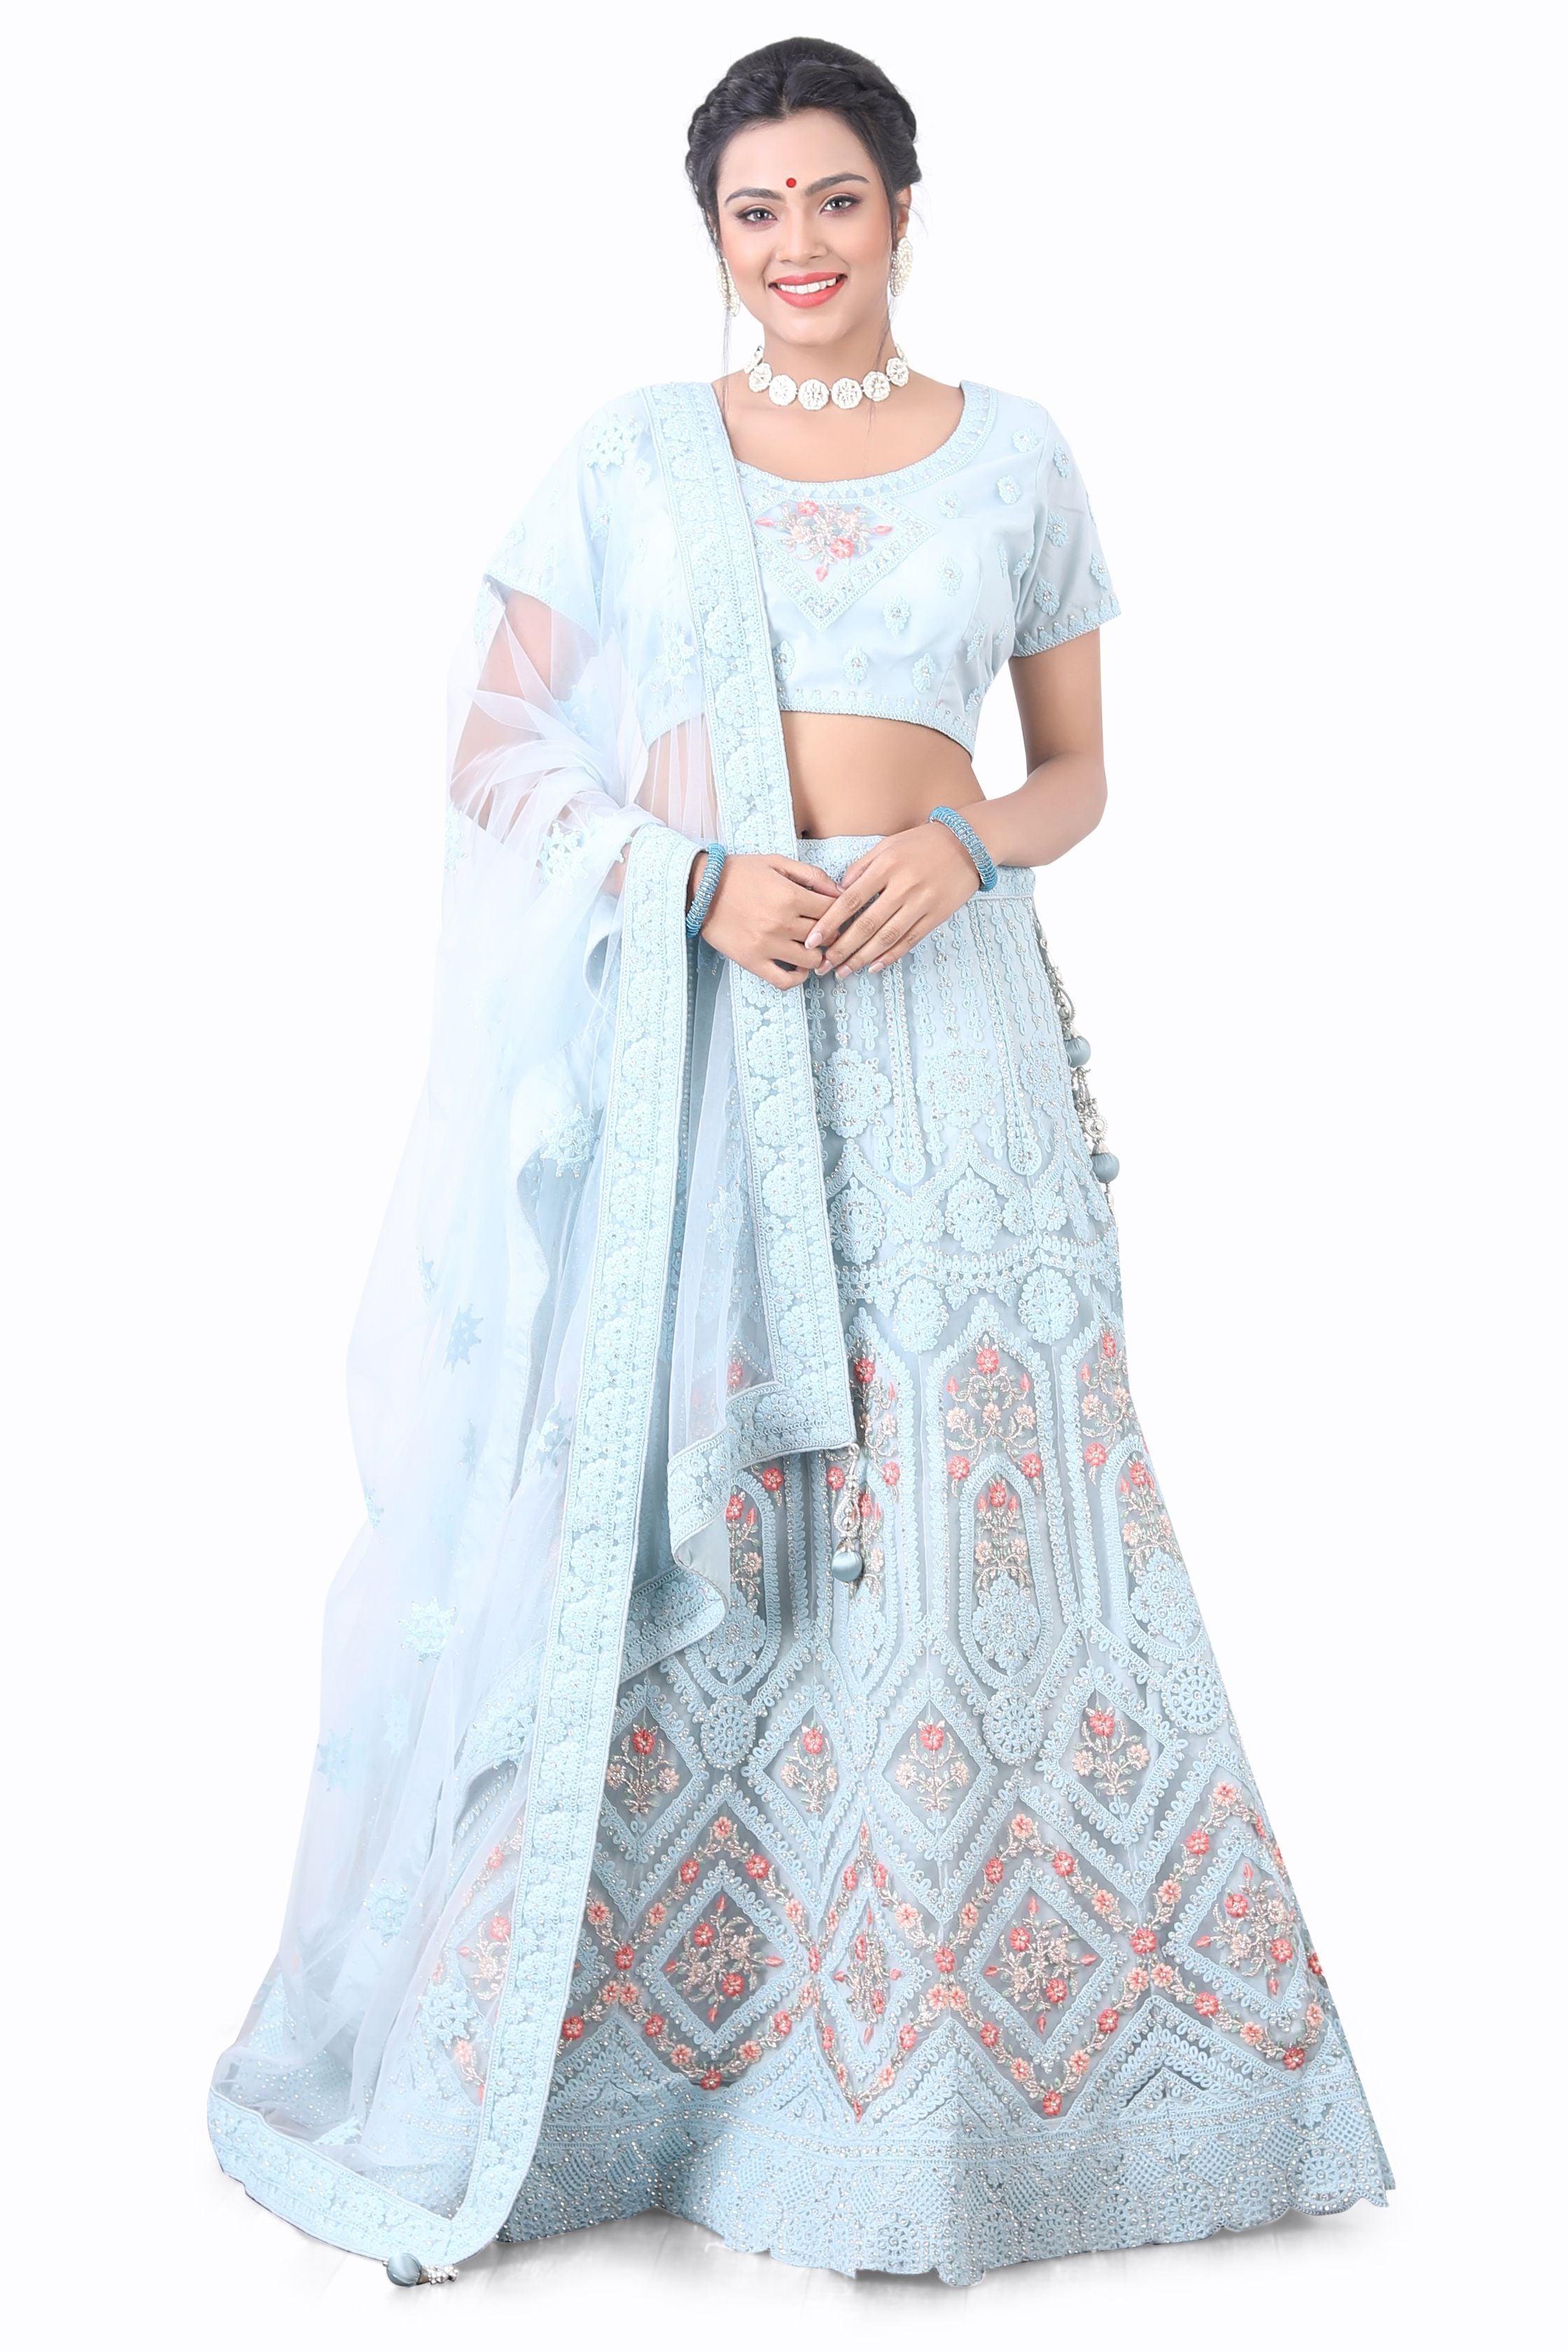 Sky Blue Net Lehenga Choli - Premium Bridal lehenga from Dulhan Exclusives - Just $785! Shop now at Dulhan Exclusives